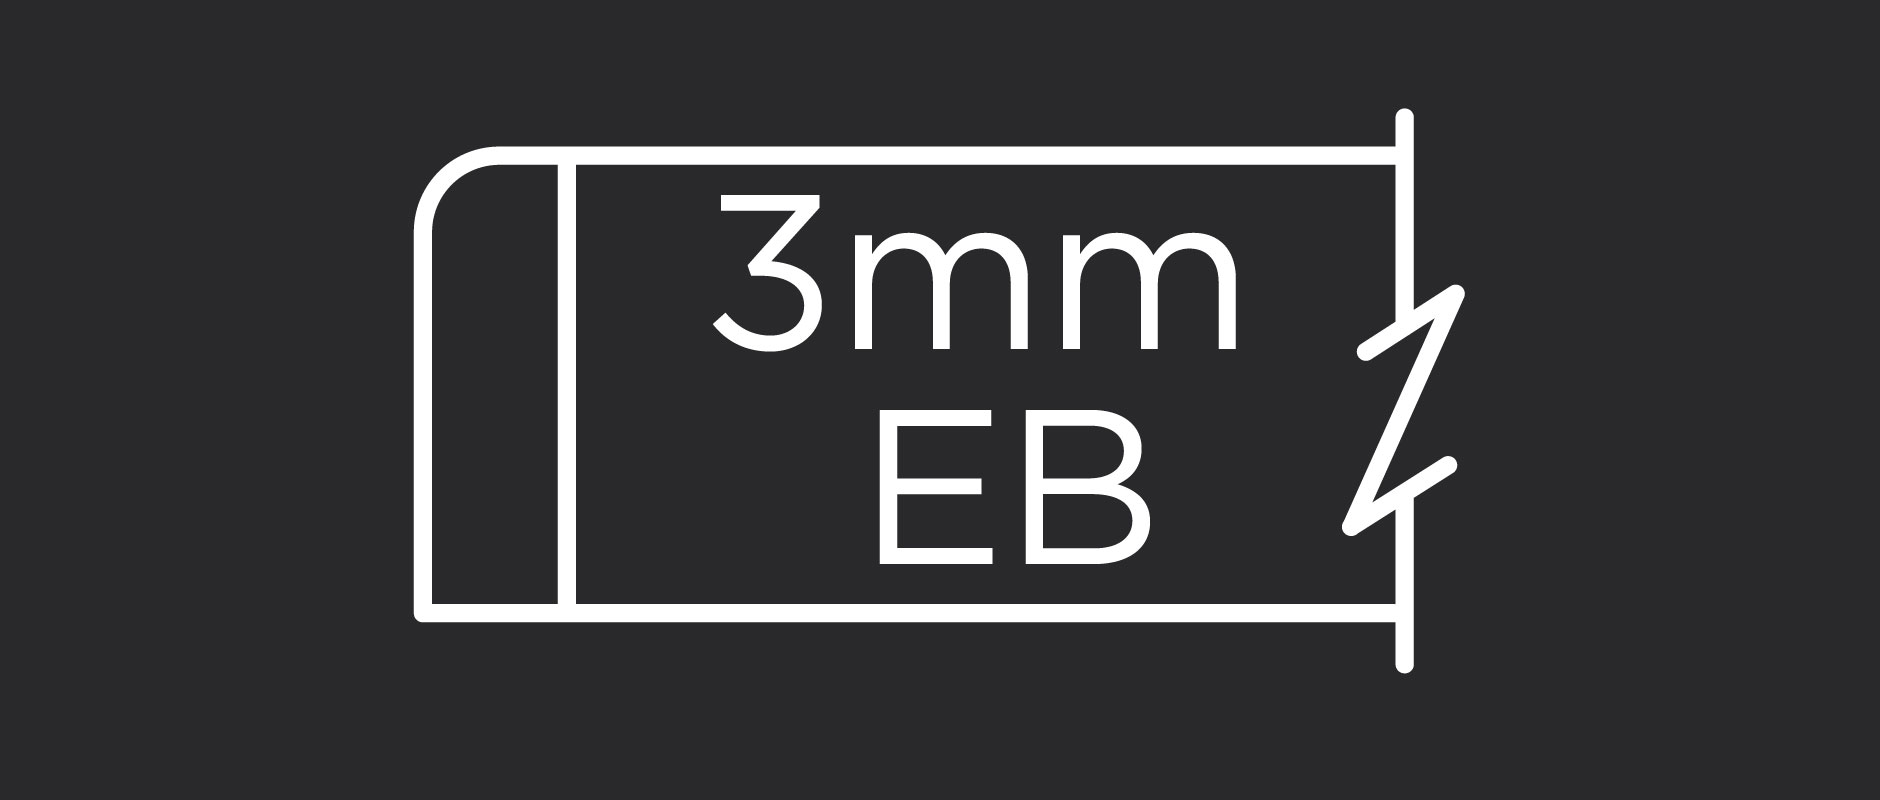 3mm edgeband profile for veneer